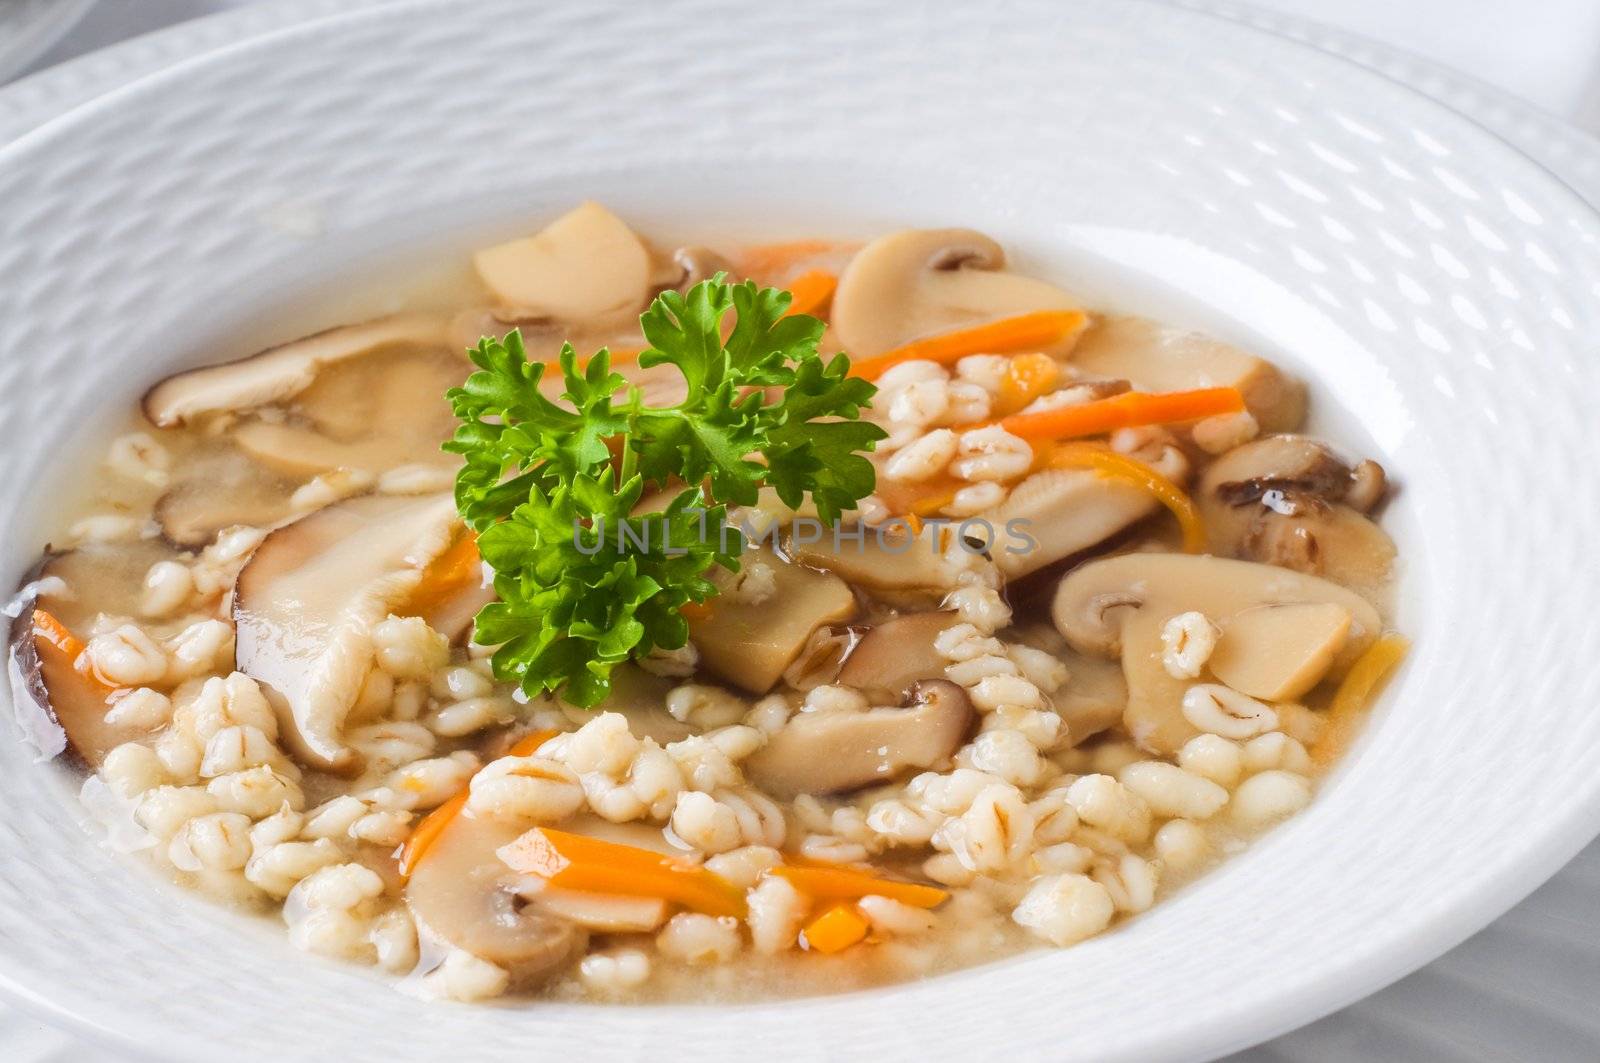 Bowl of wild mushroom and lentil soup.